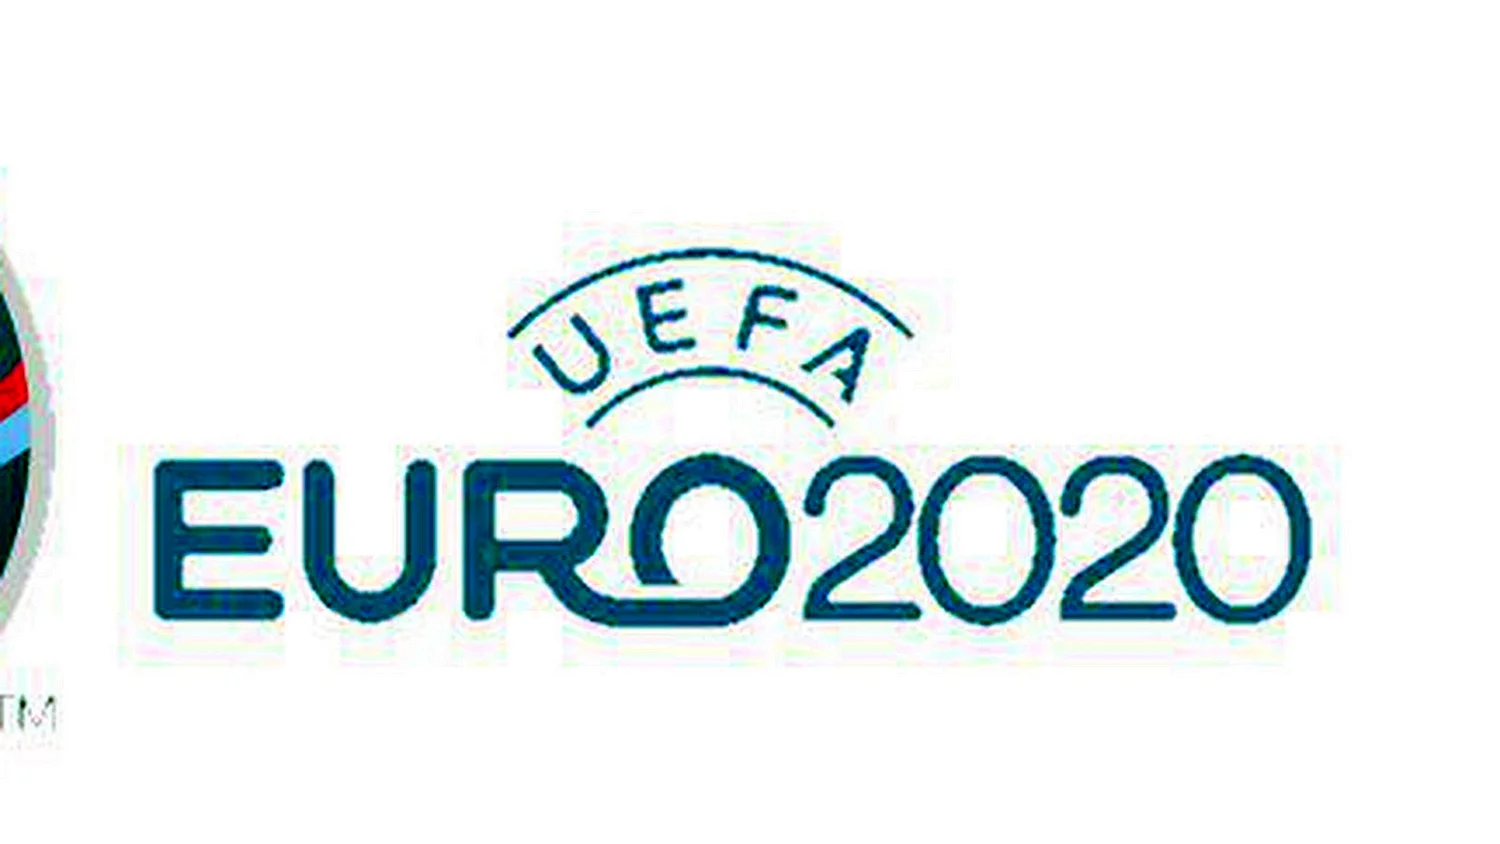 Евро 2020 логотип